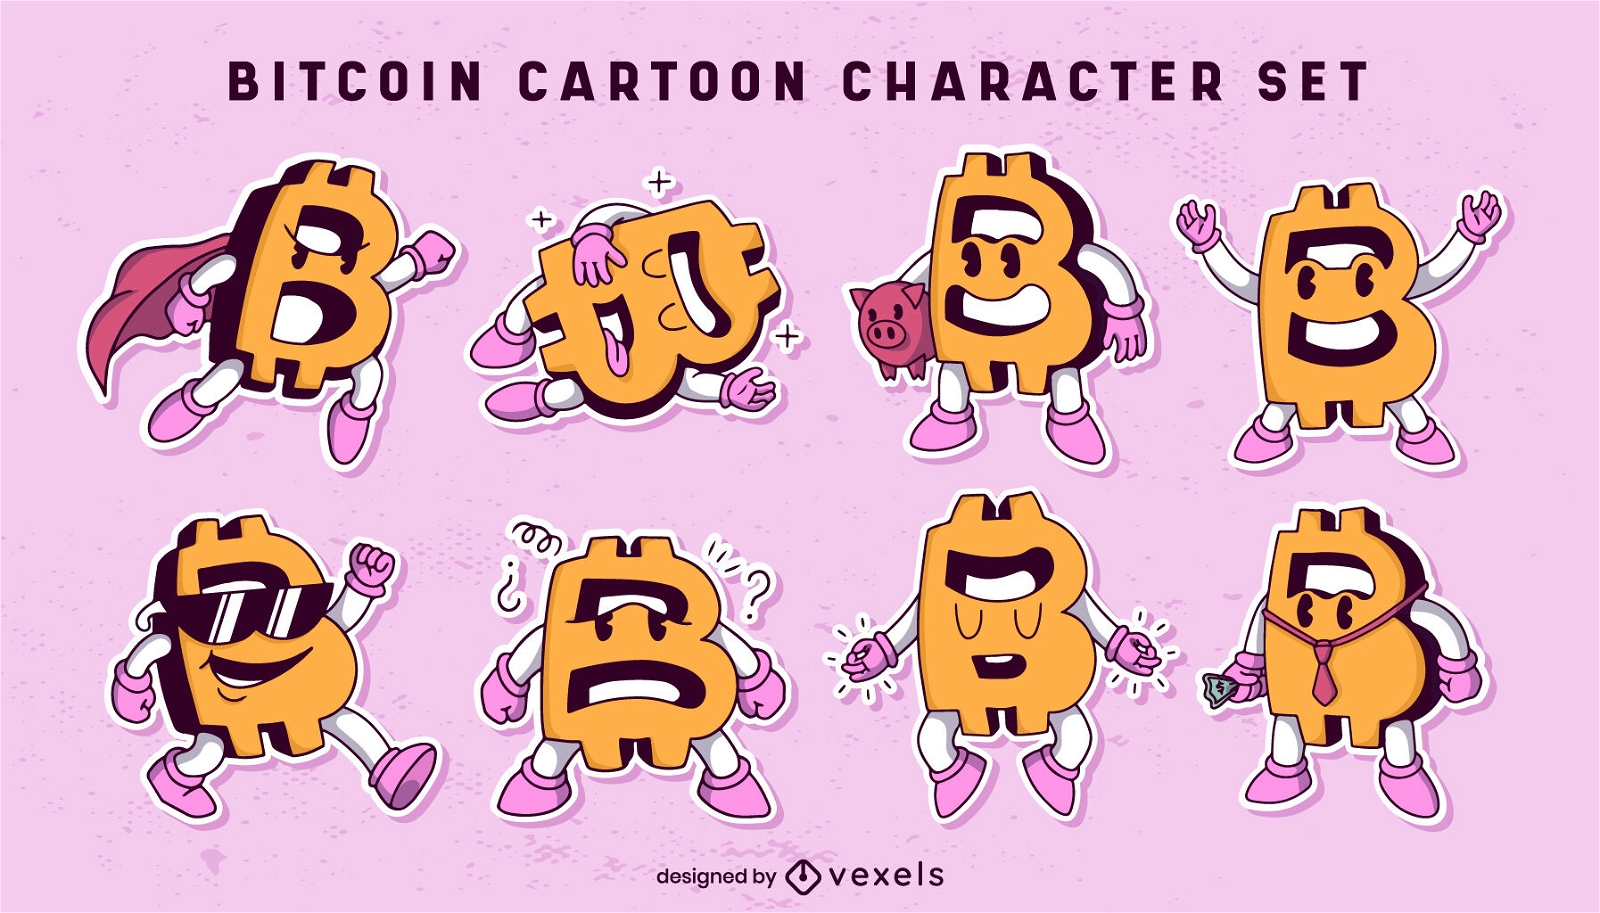 Bitcoin cartoon characters set